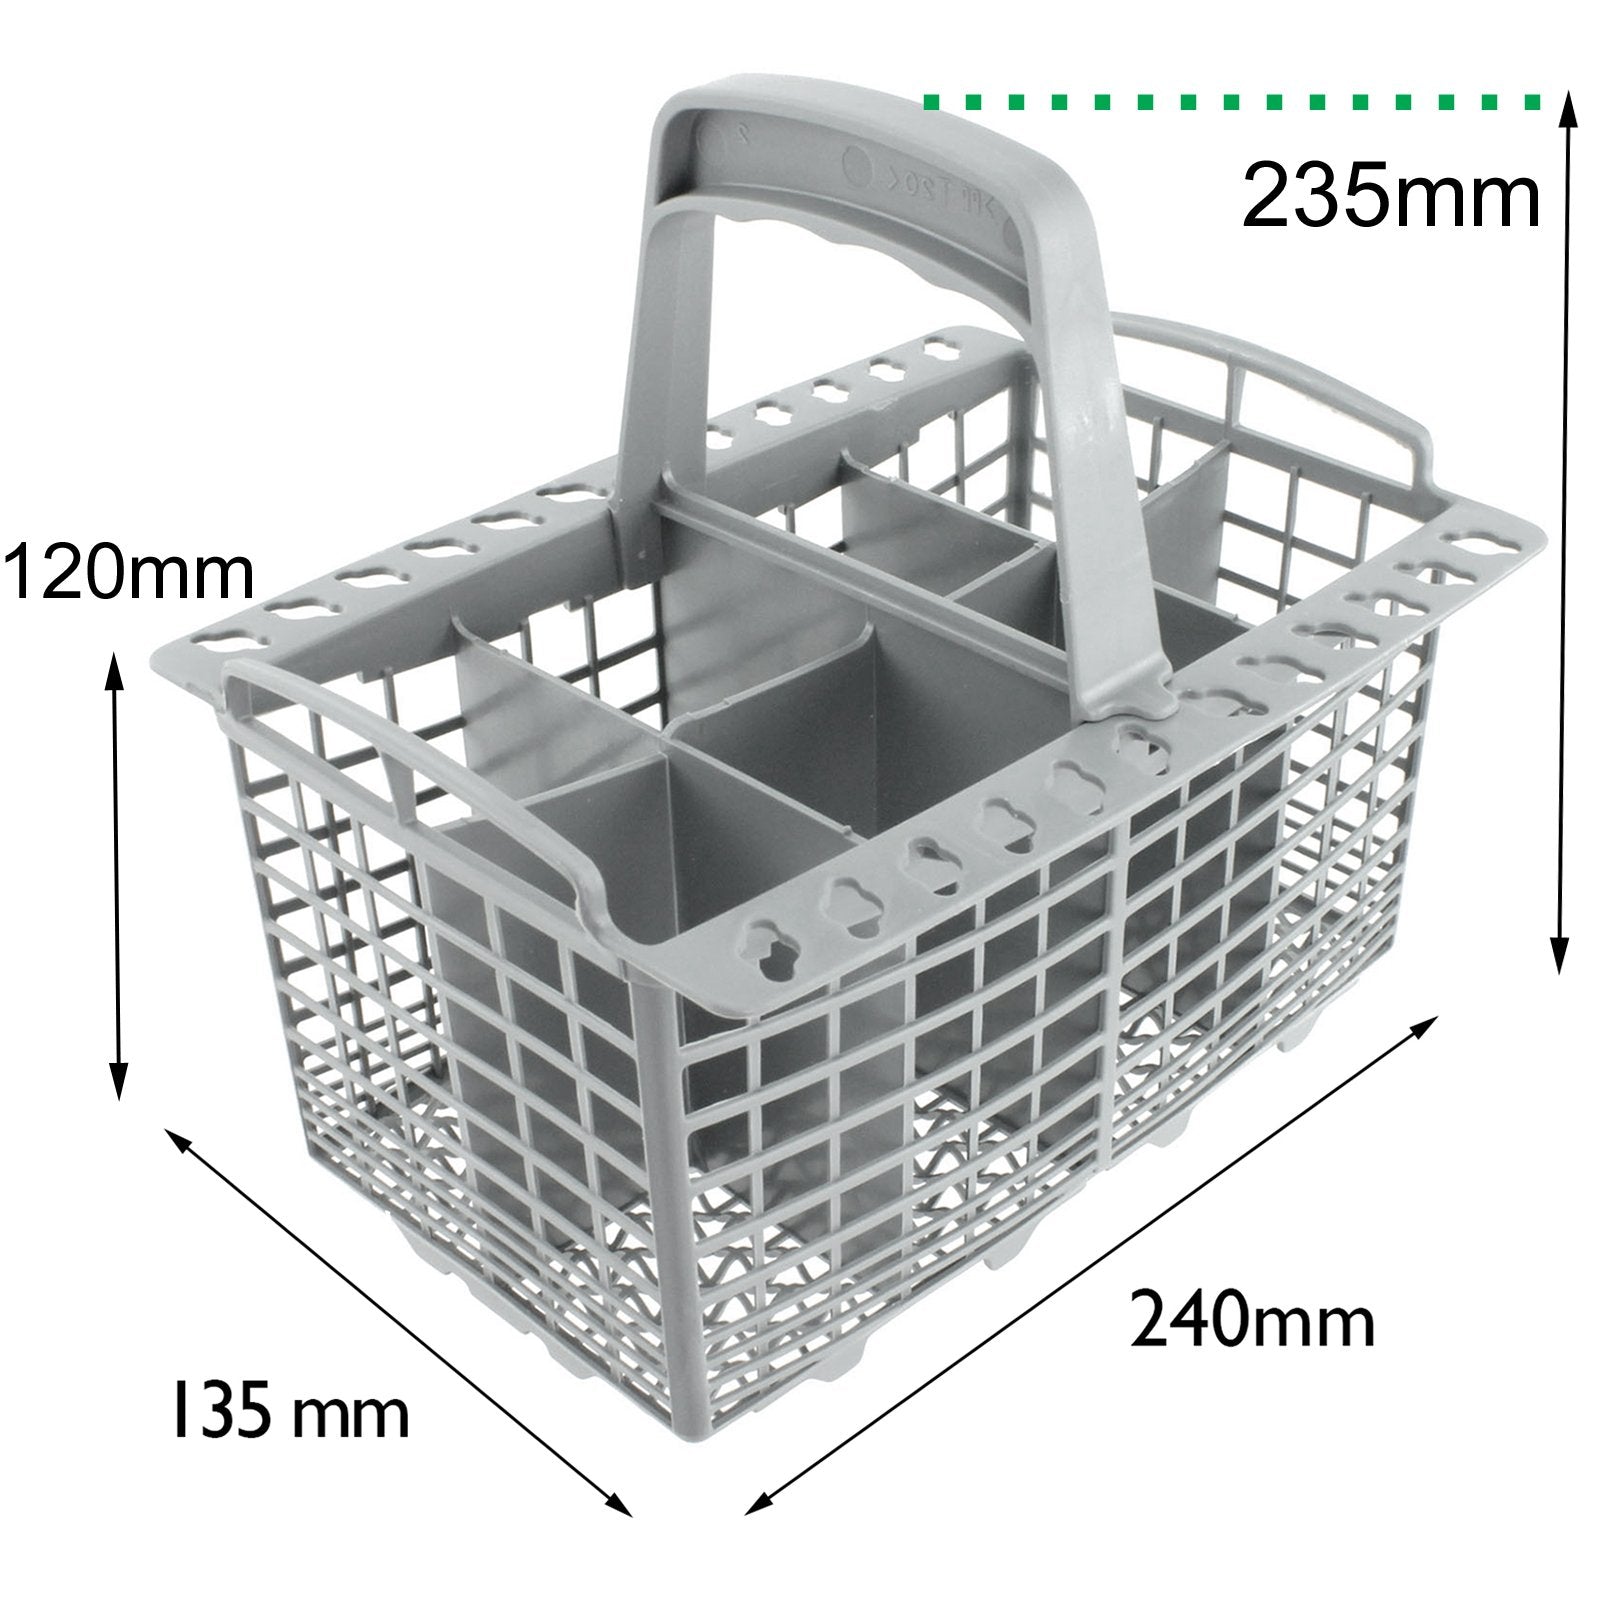 WHIRLPOOL Dishwasher Cutlery Basket Genuine with measurments